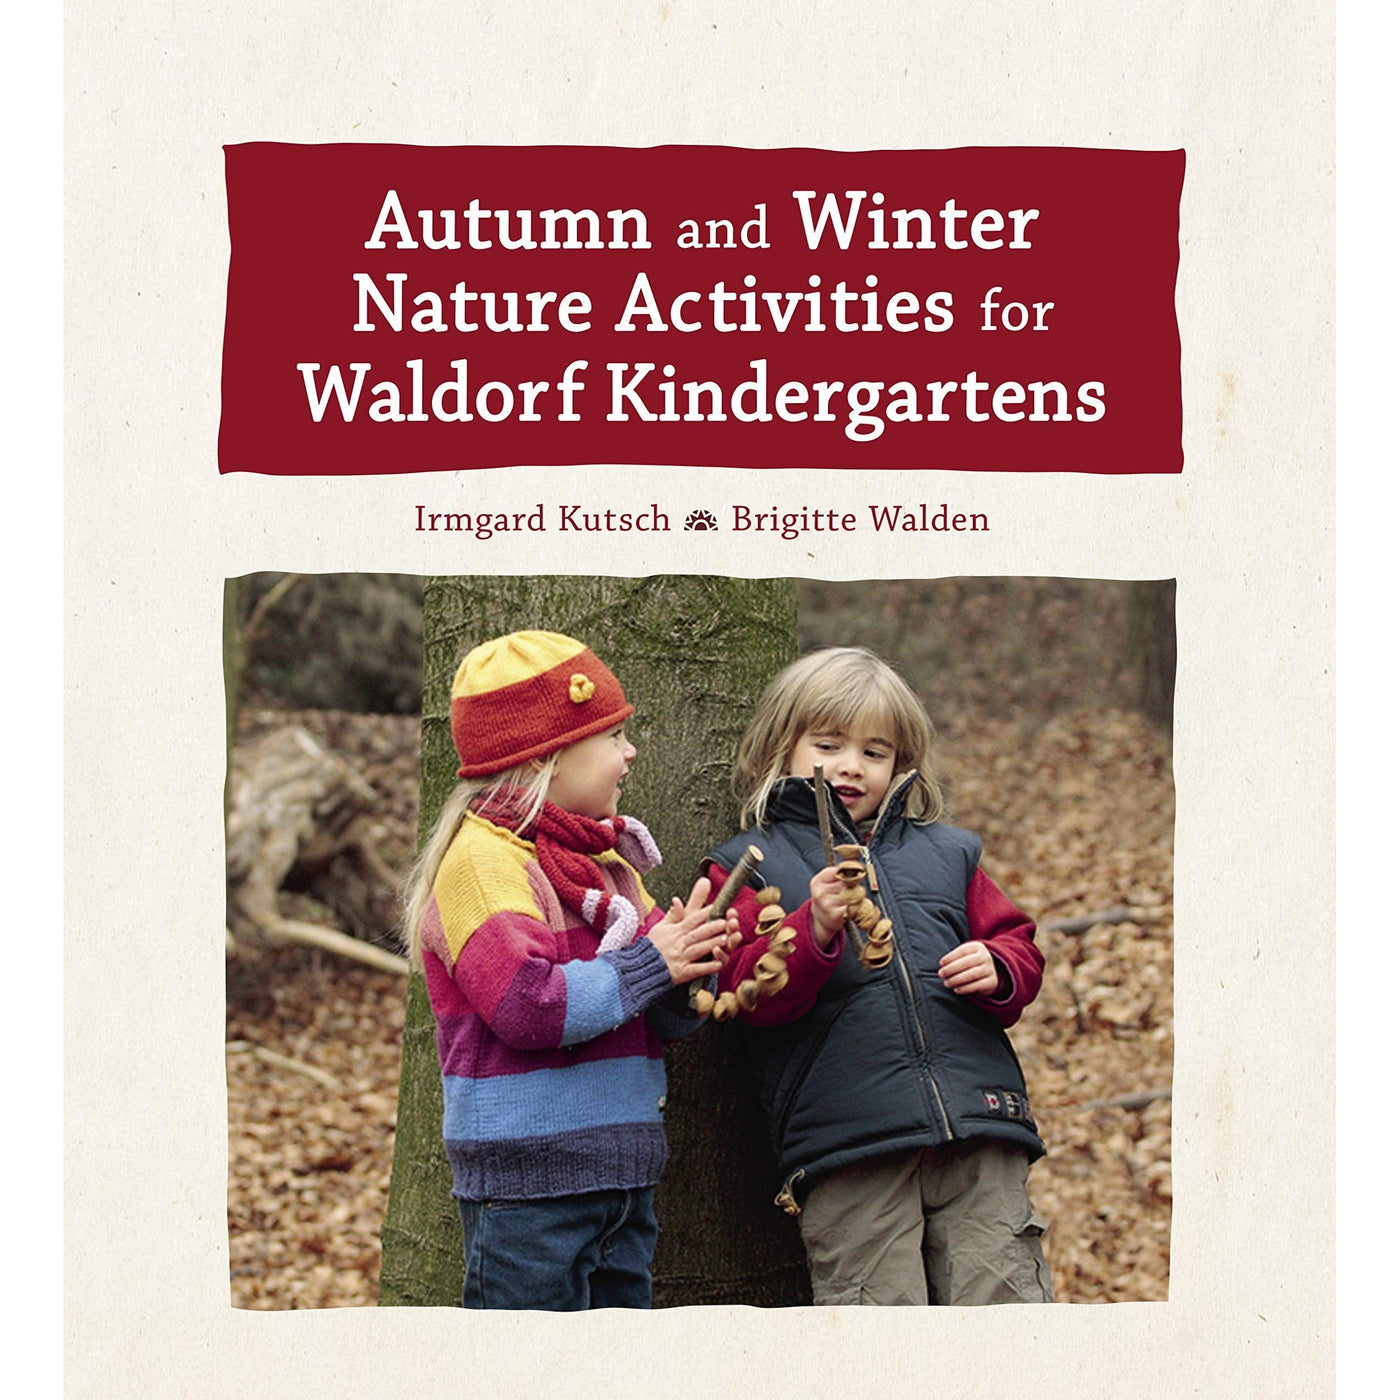 Autumn And Winter Nature Activities For Waldorf Kindergartens - Irmgard Kutsch & Brigitte Walden